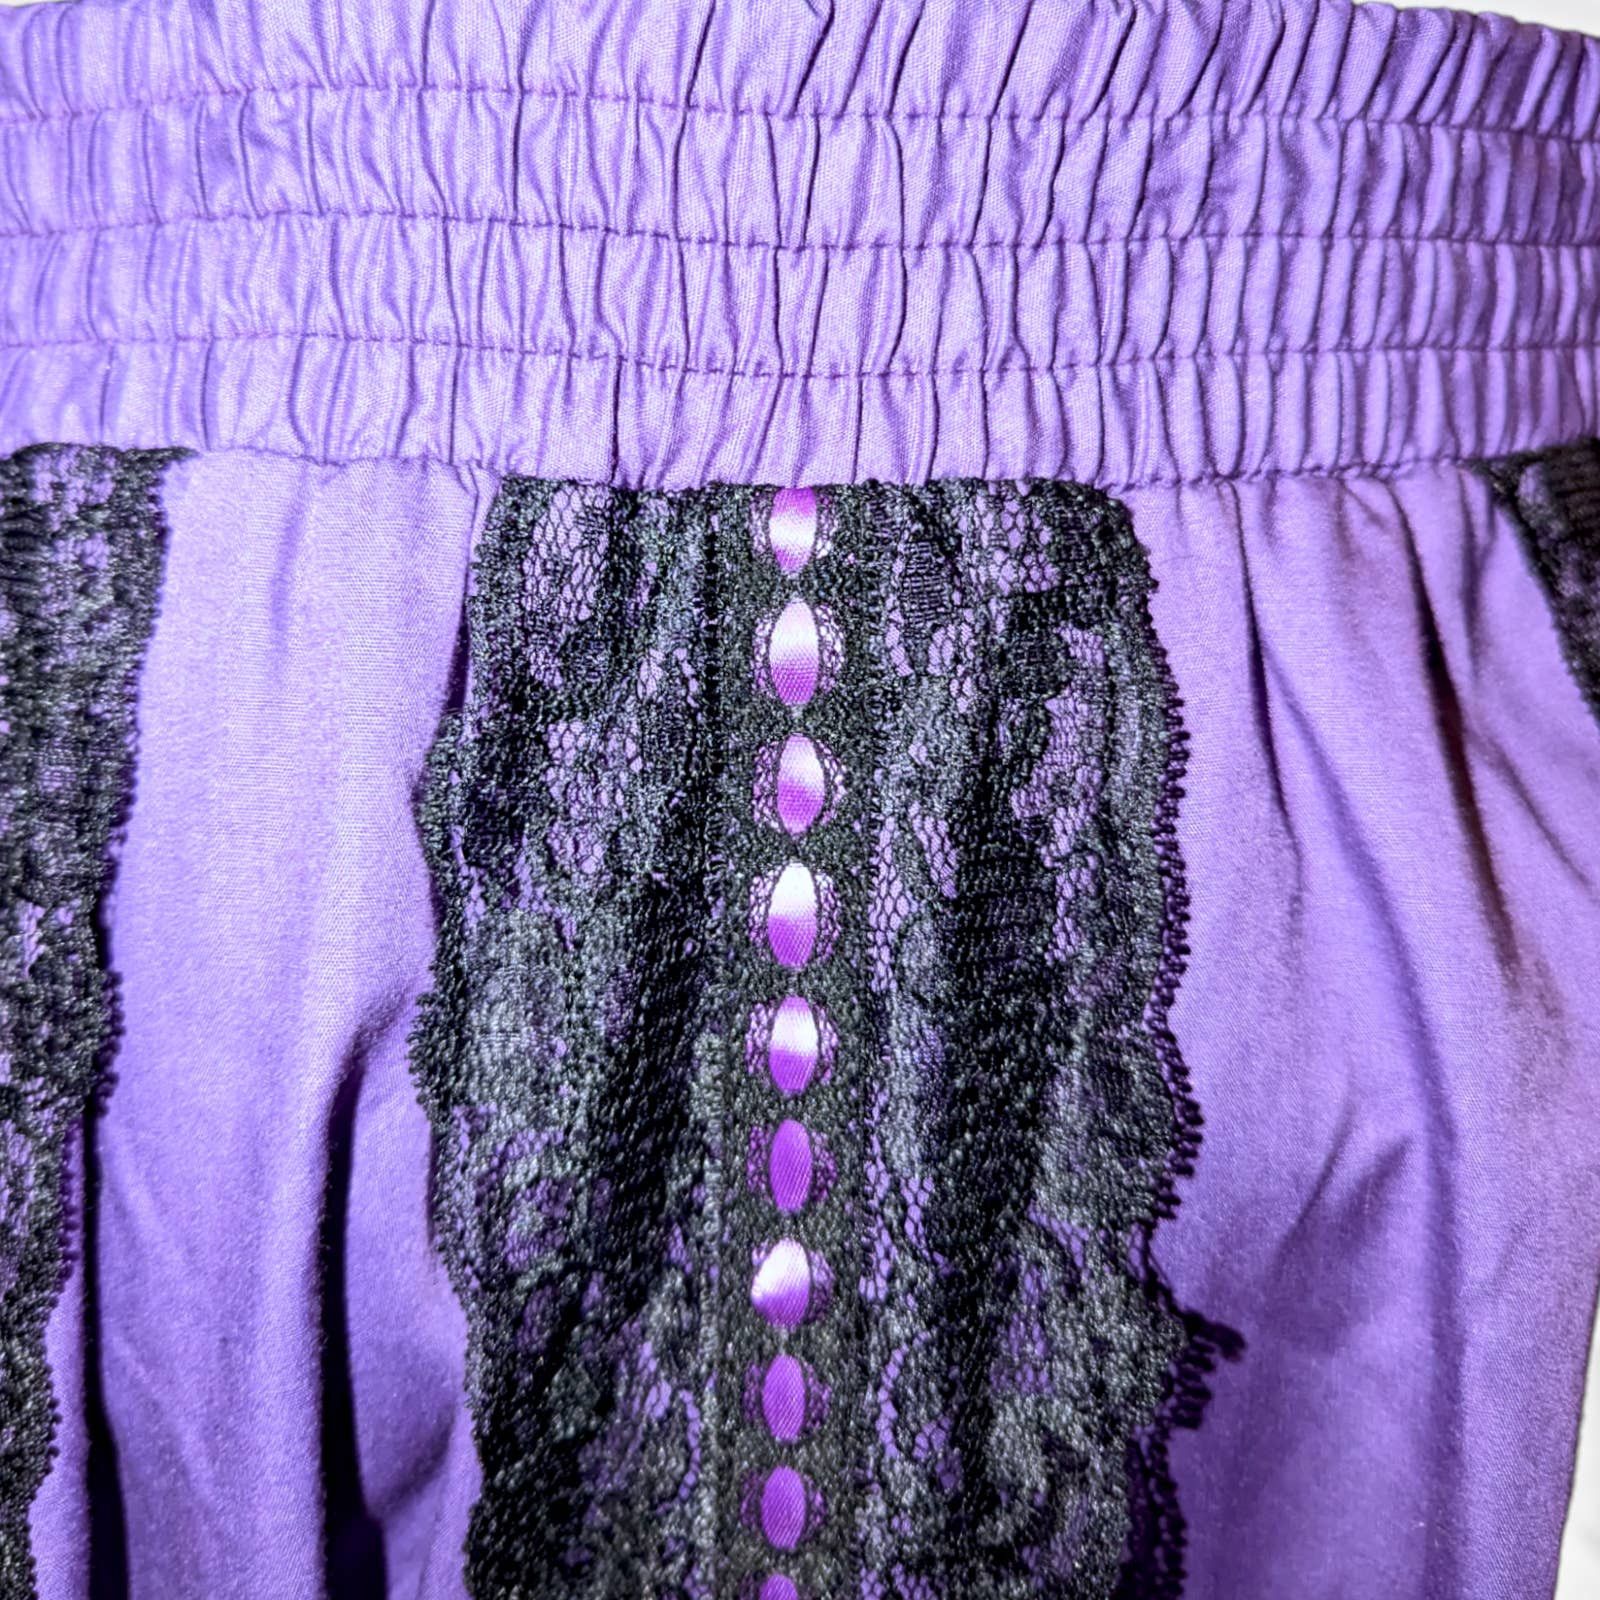 Vintage Vintage 70's Rockabilly Purple & Black Circle Skirt Size 34" / US 12 / IT 48 - 2 Preview